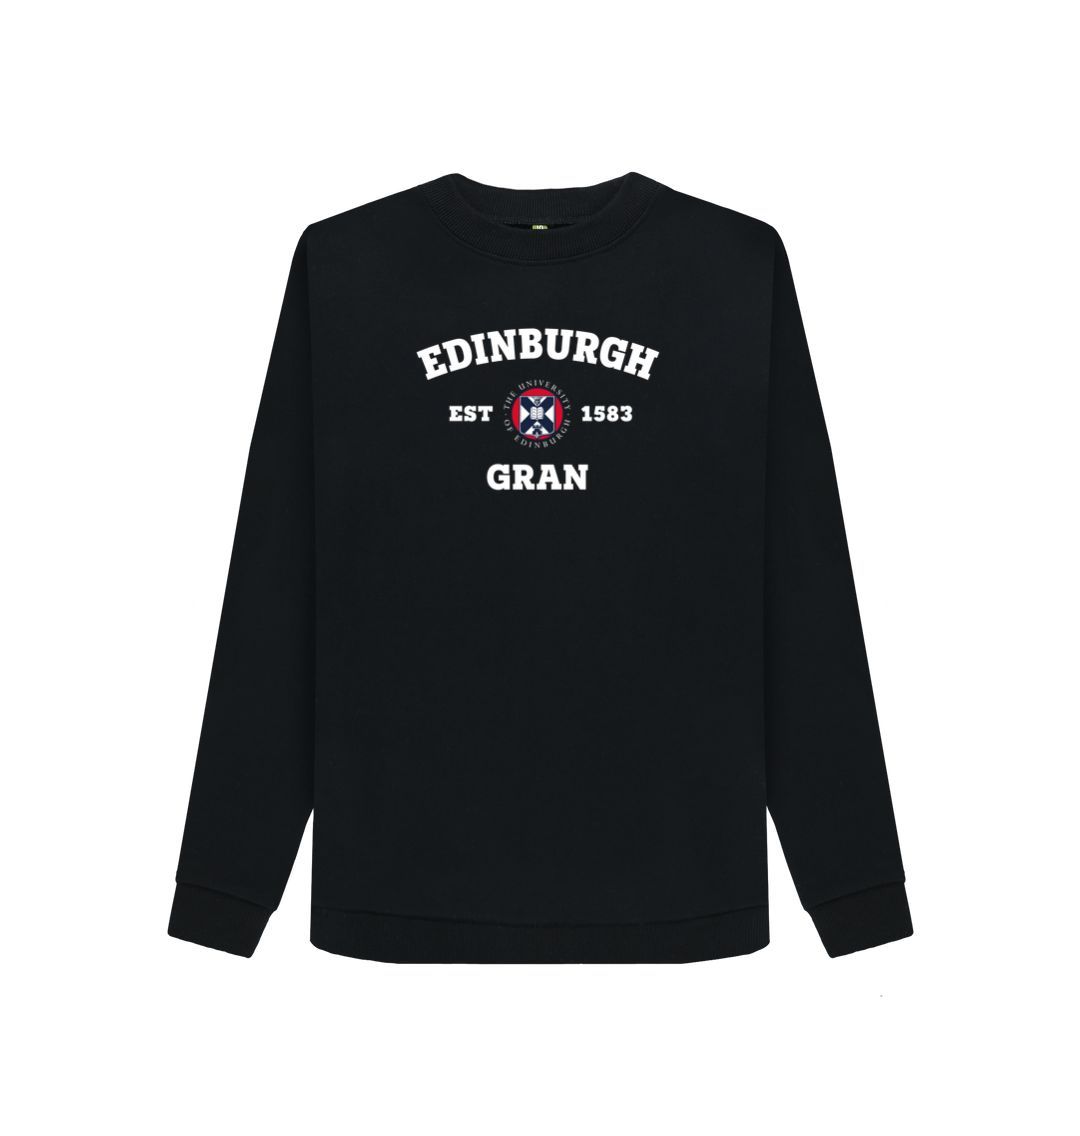 Black Edinburgh Gran Sweatshirt